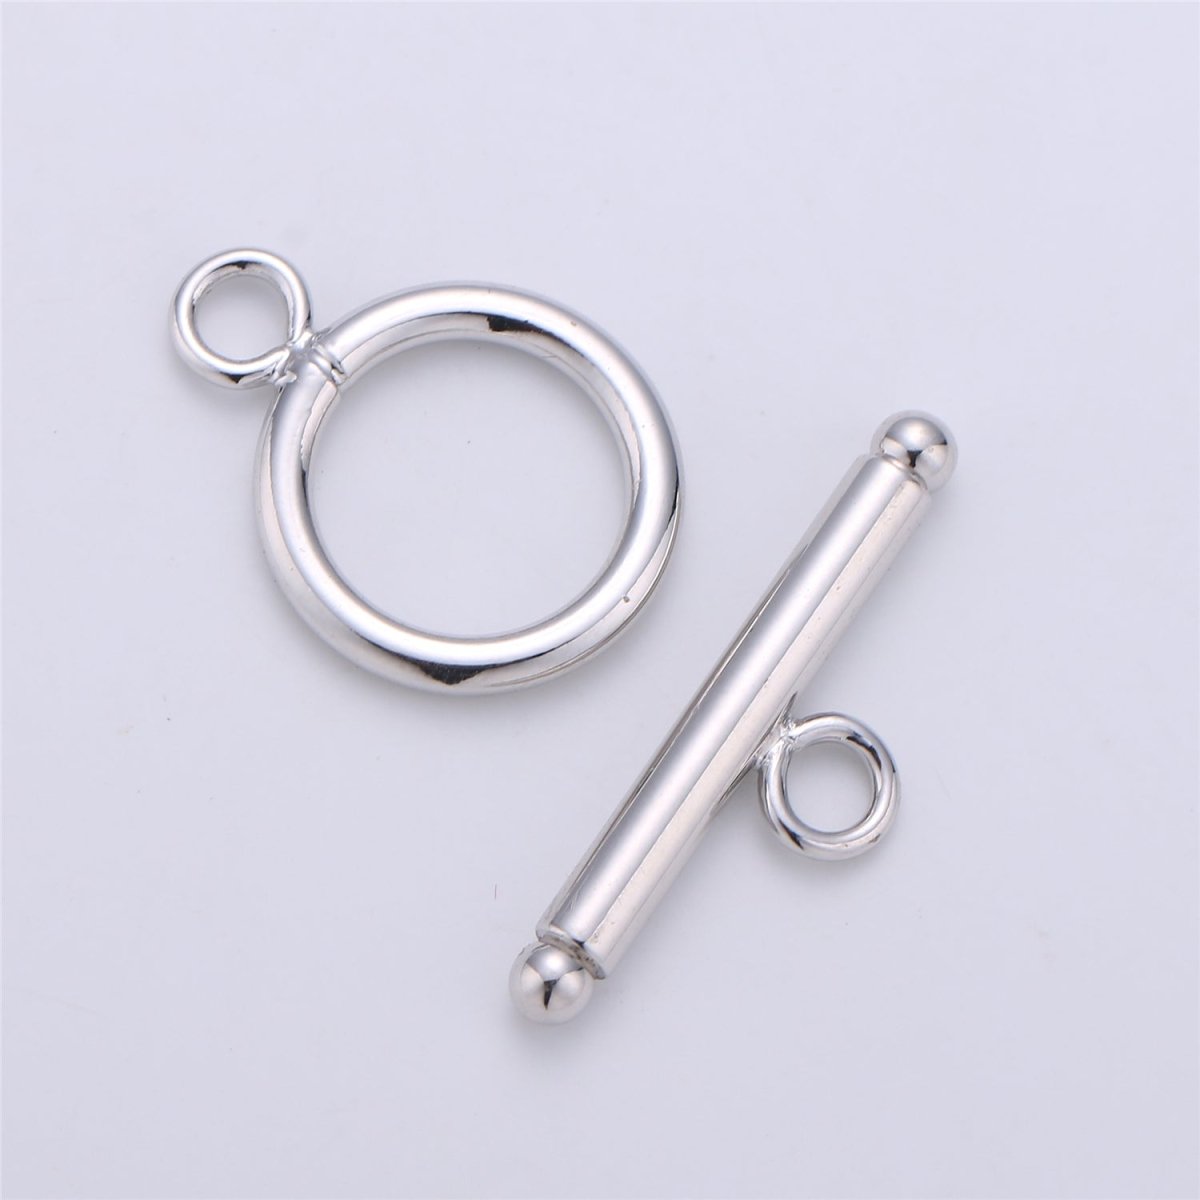 15mm 14K Gold Filled Toggle Clasp 1 set for Bracelet Necklace Jewelry Making Supply | K-175 K-121 - DLUXCA